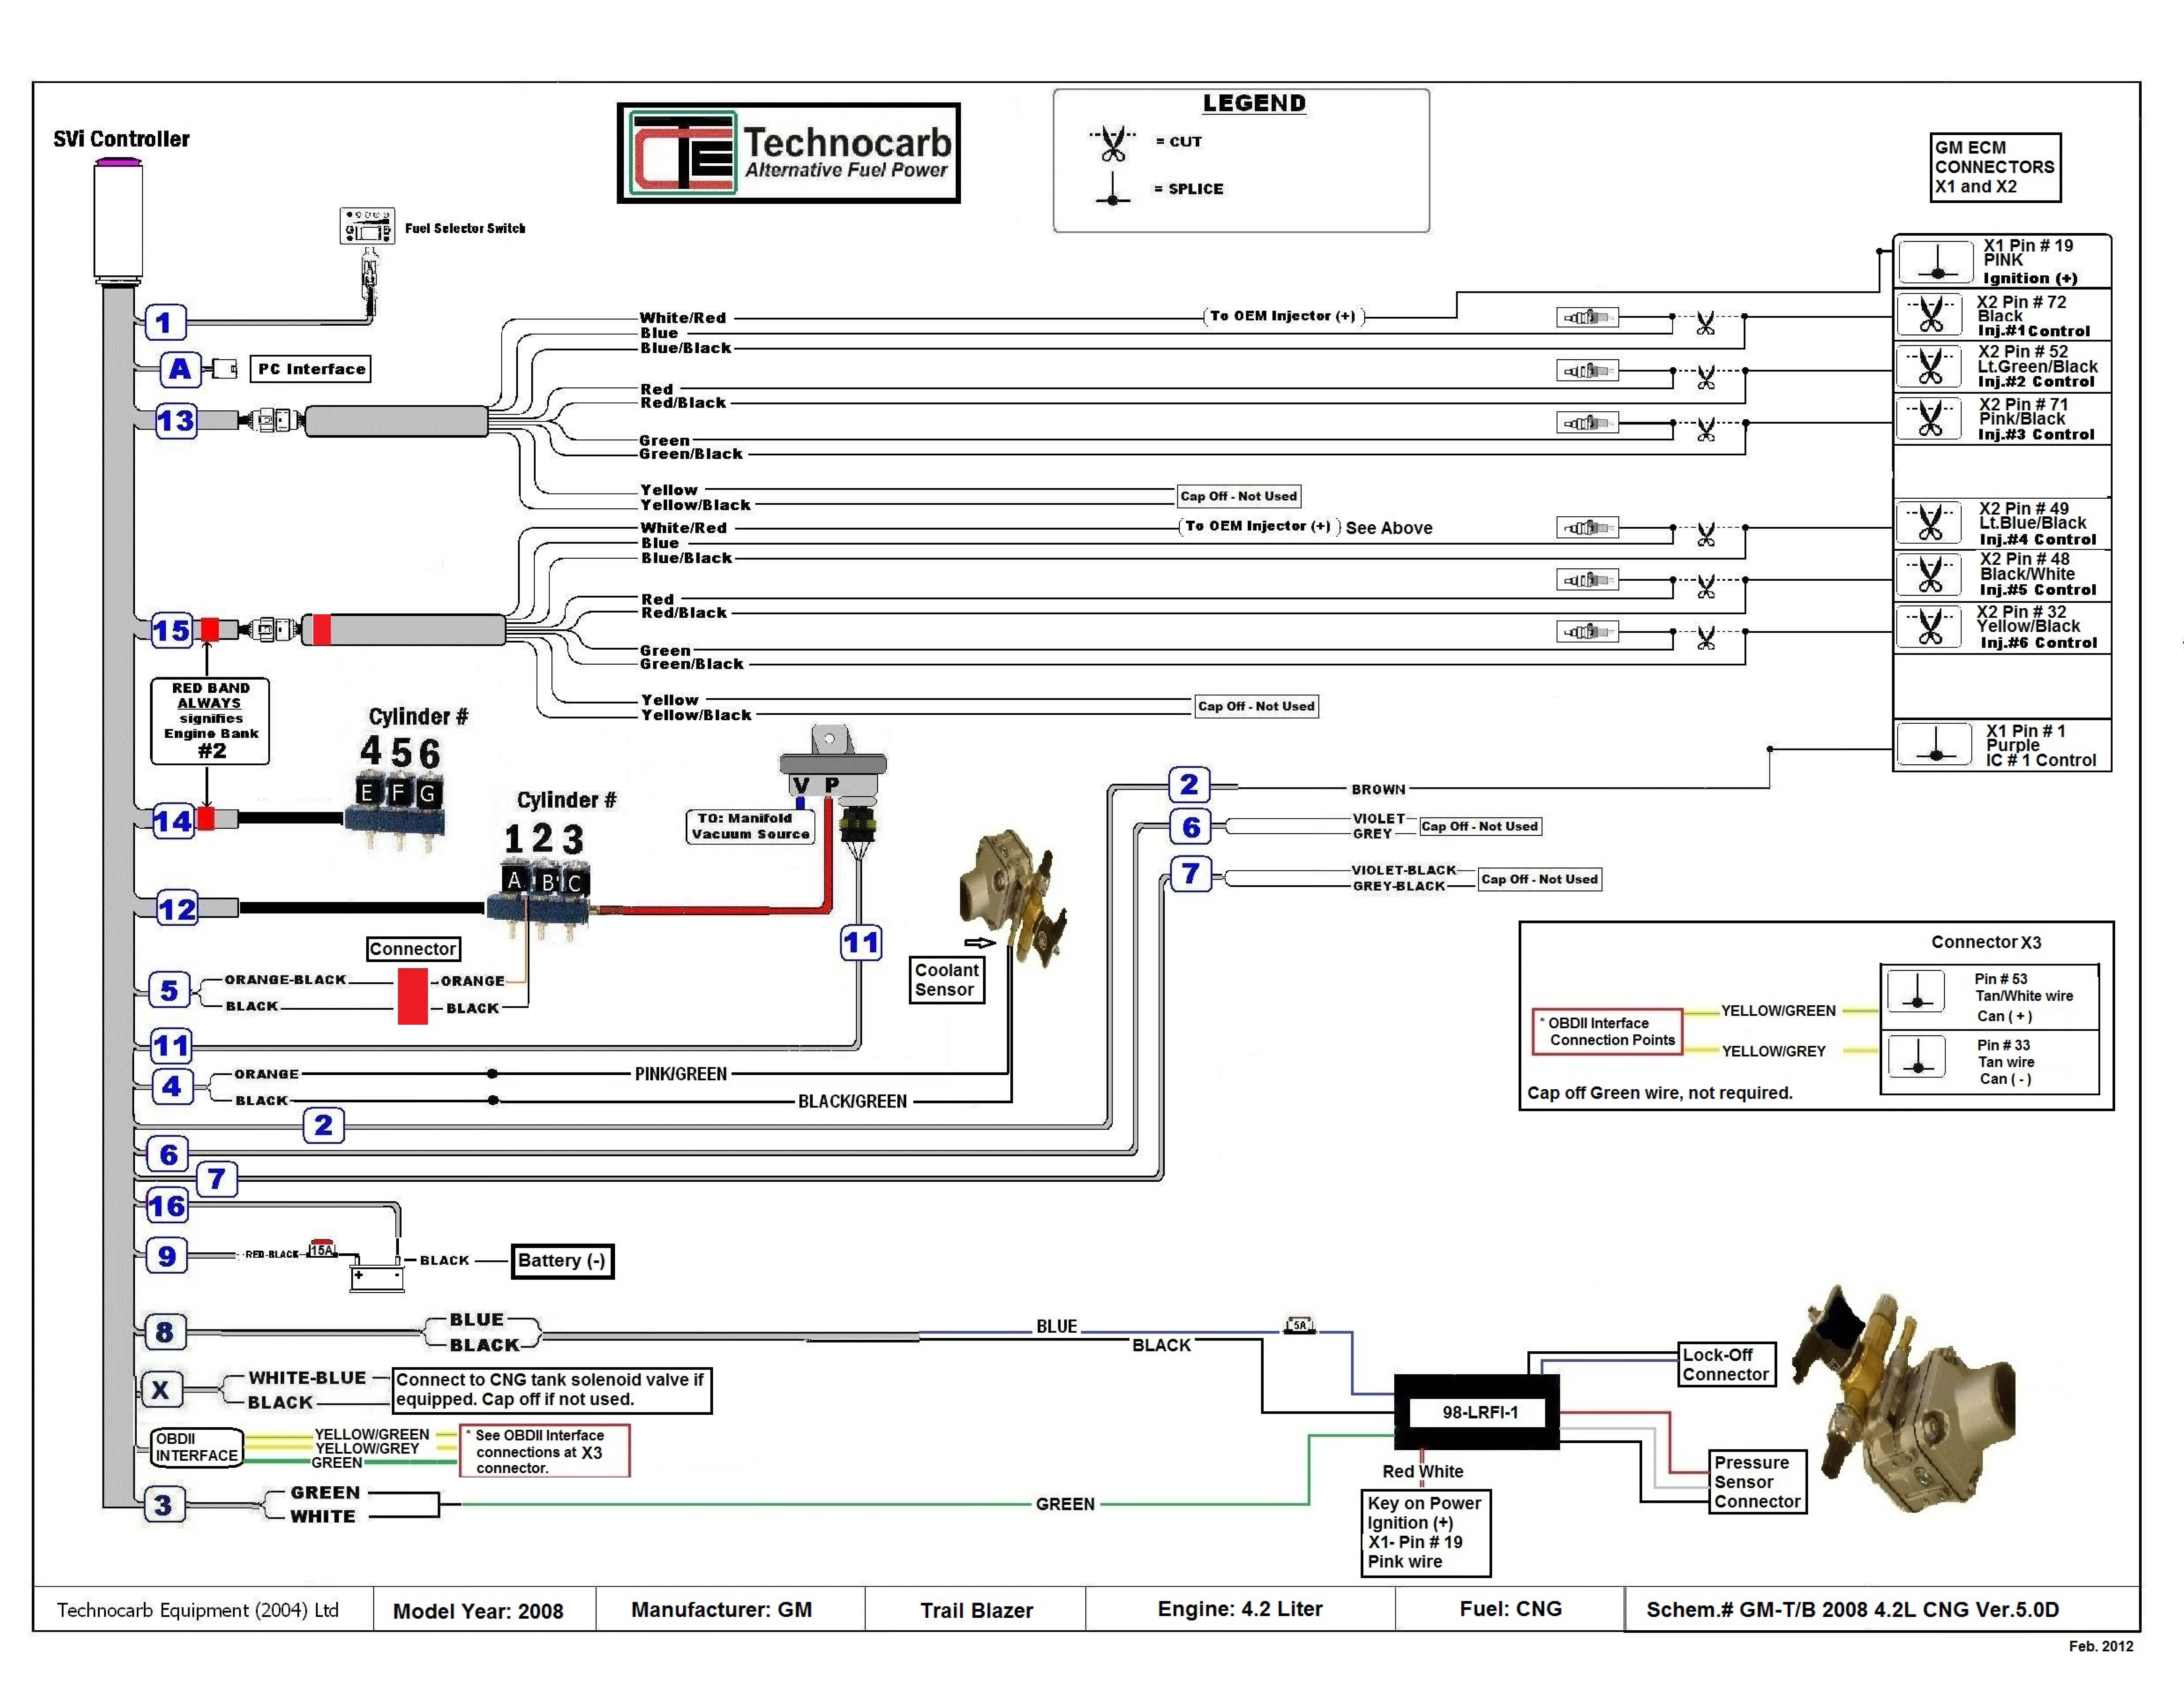 Diagram Rsx Injector Wiring Diagram Full Version Hd Quality Wiring Diagram Diagramsound Villananimocenigo It